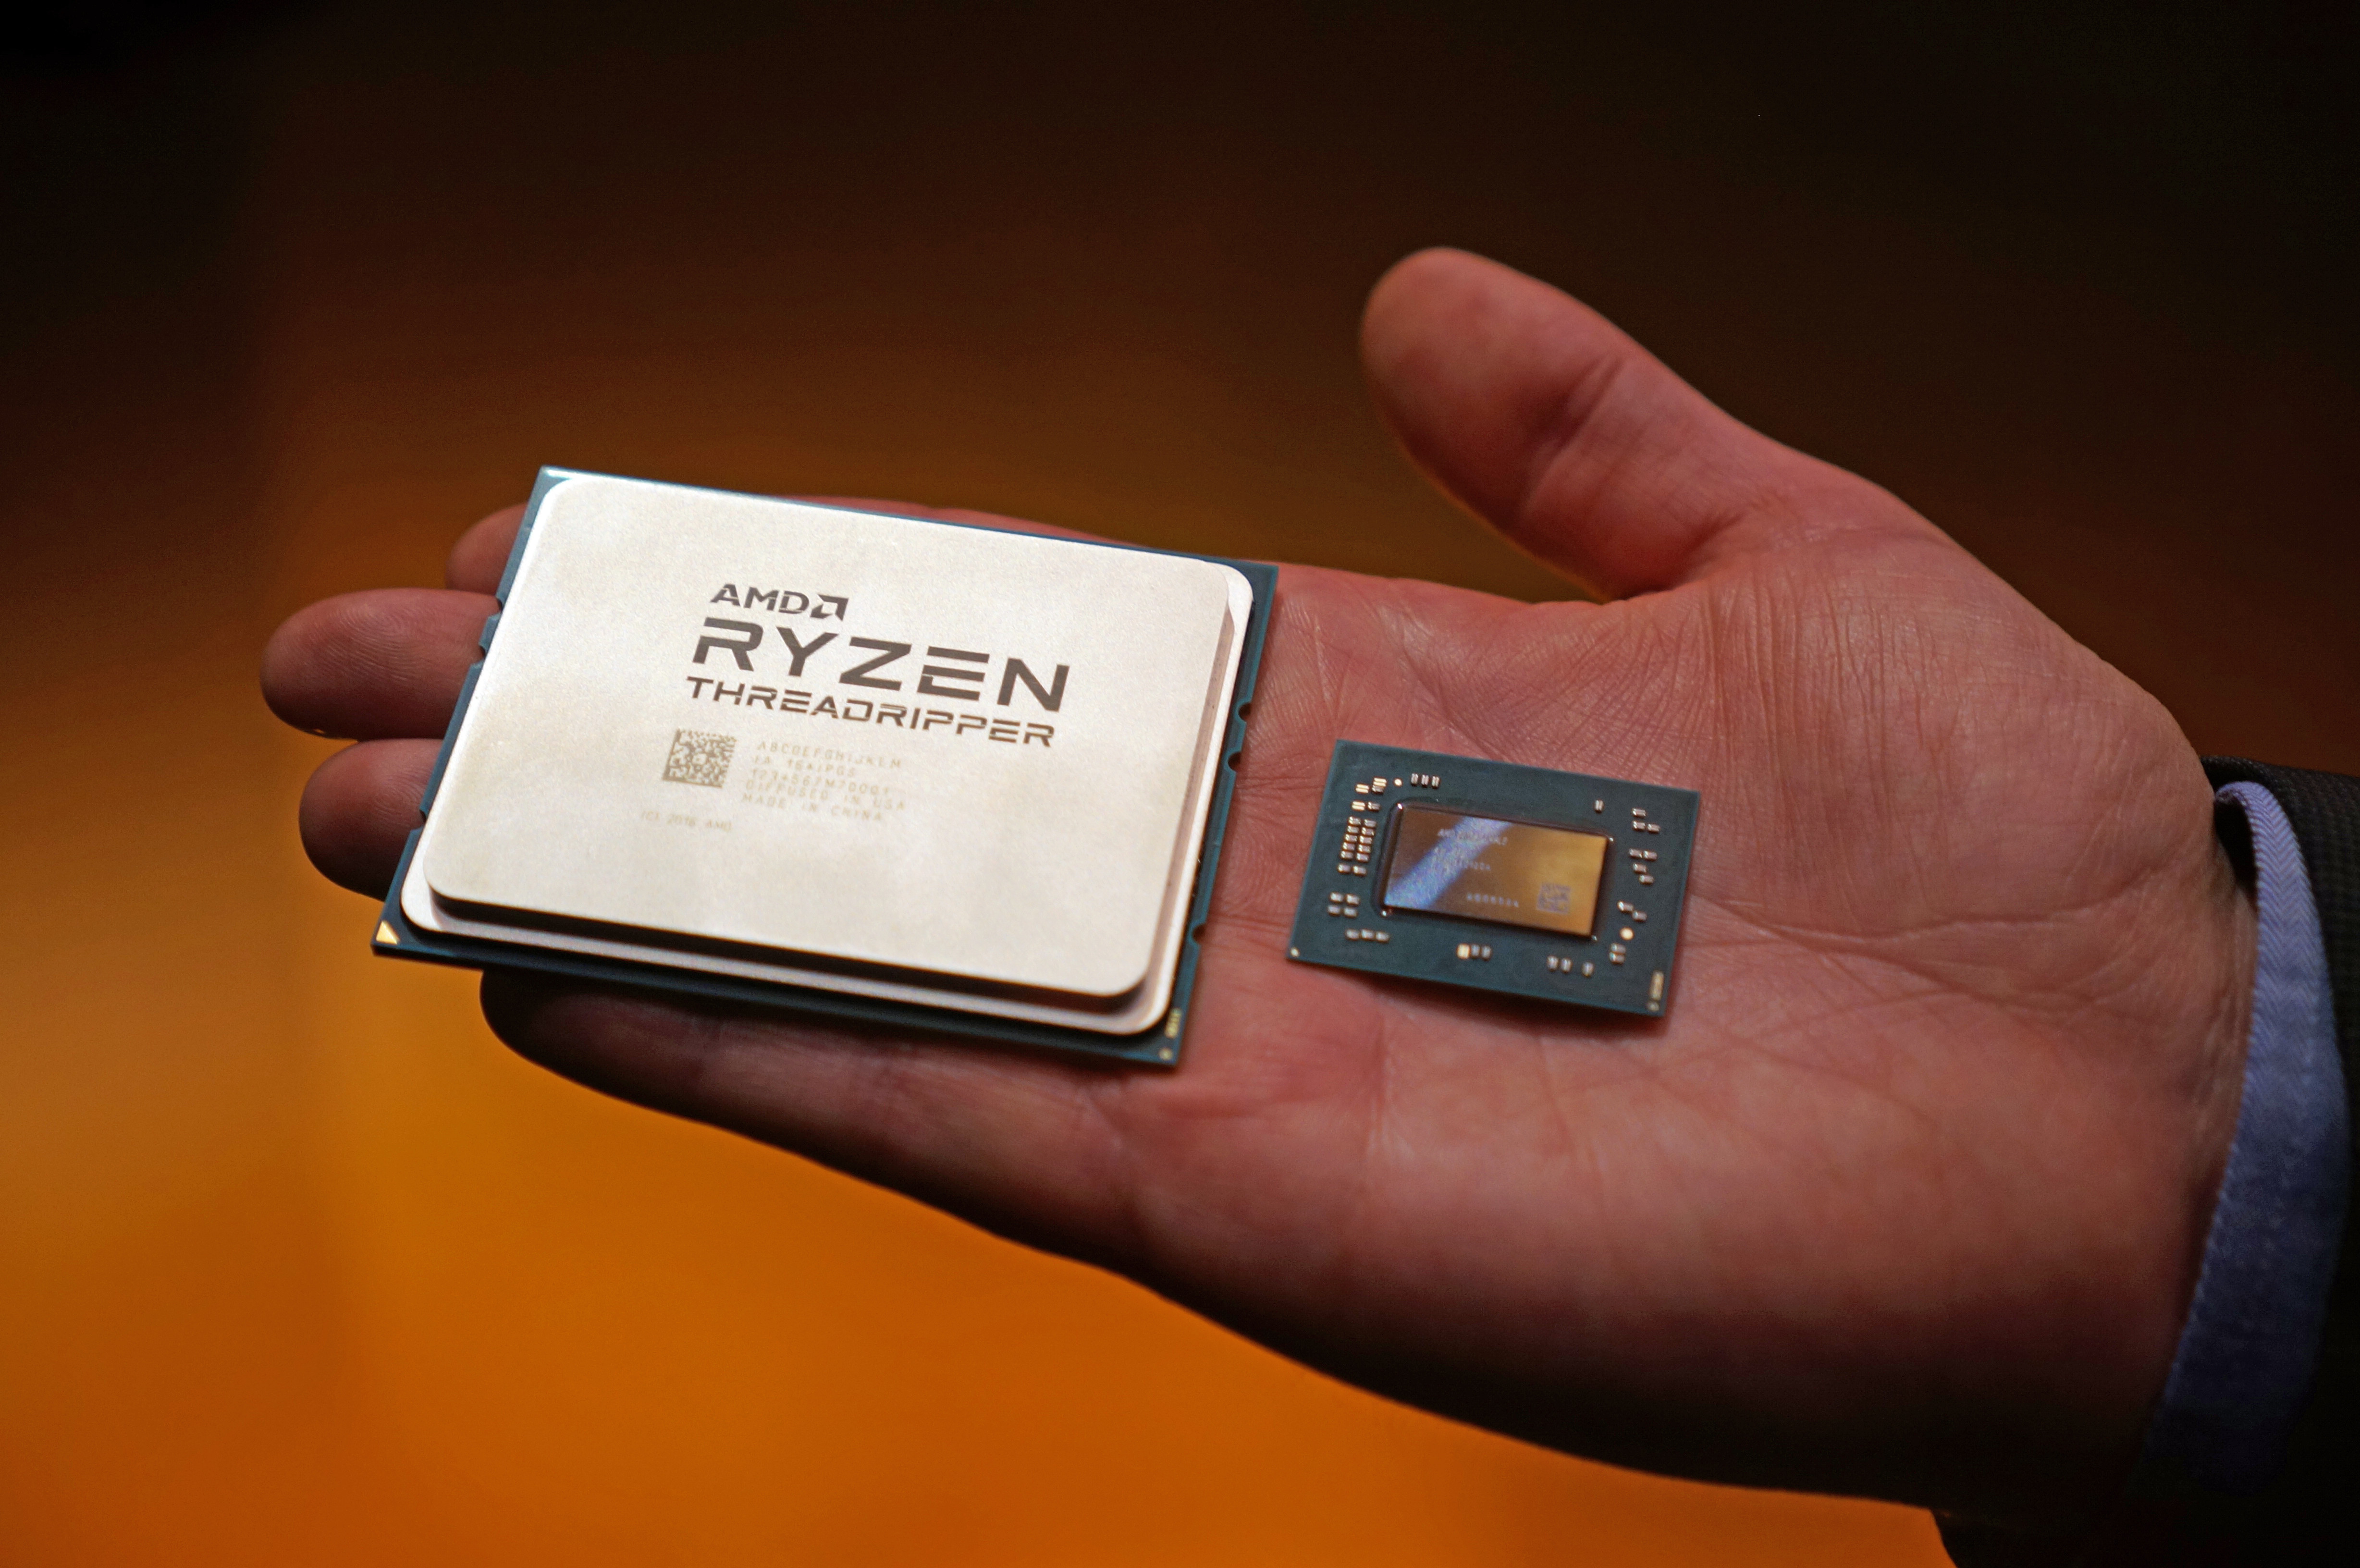 On The Story of AMD's Ryzen Threadripper Product Development